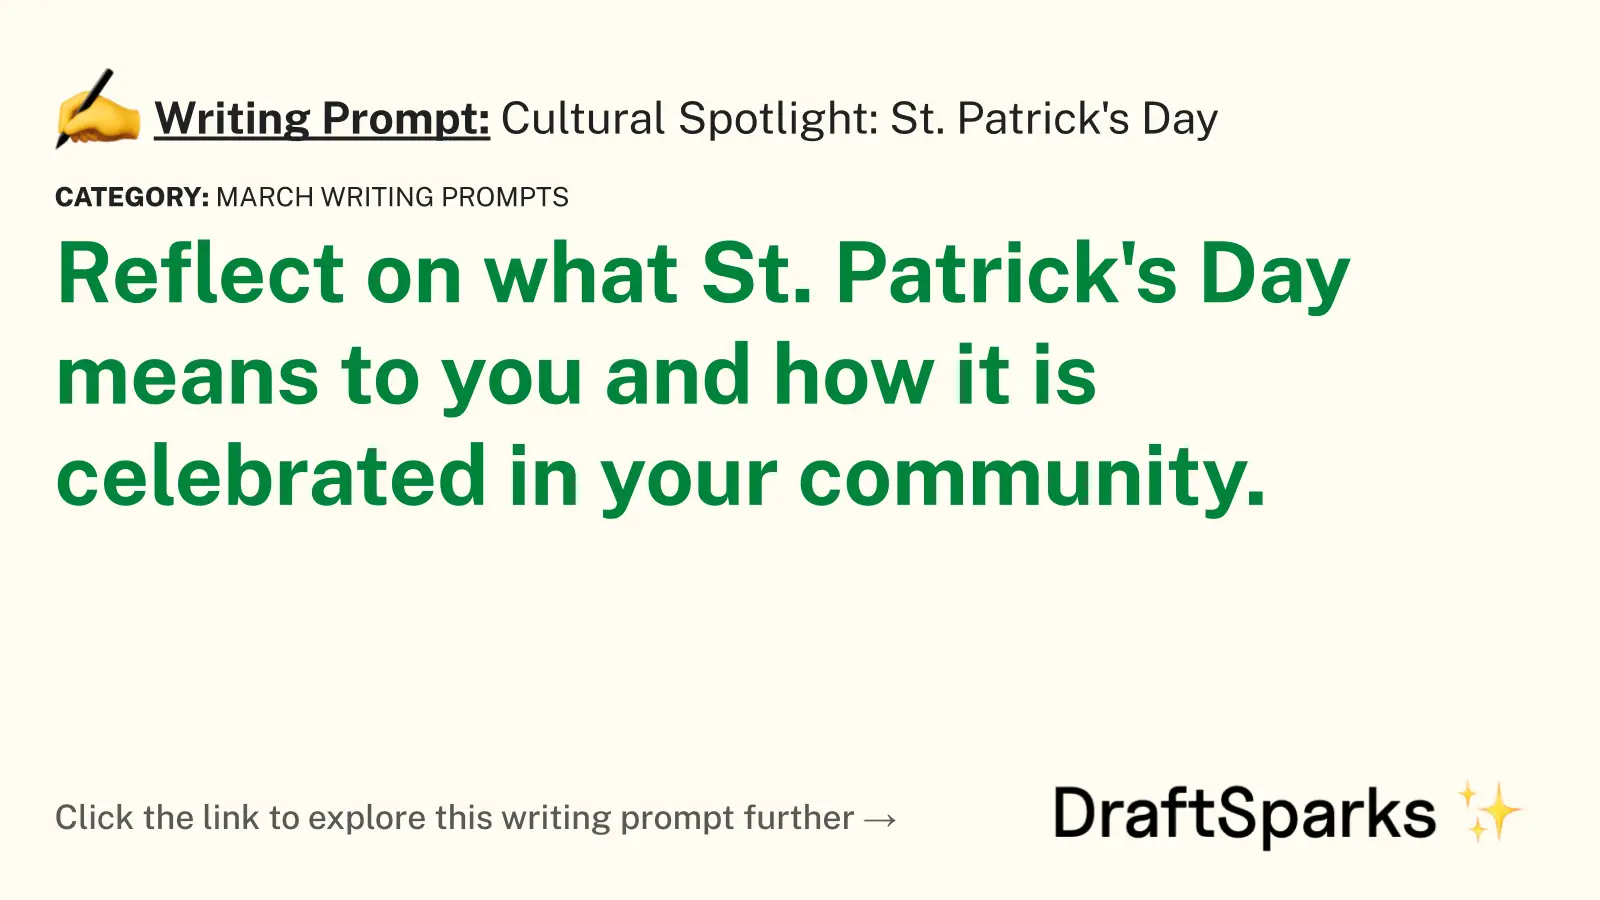 Cultural Spotlight: St. Patrick’s Day